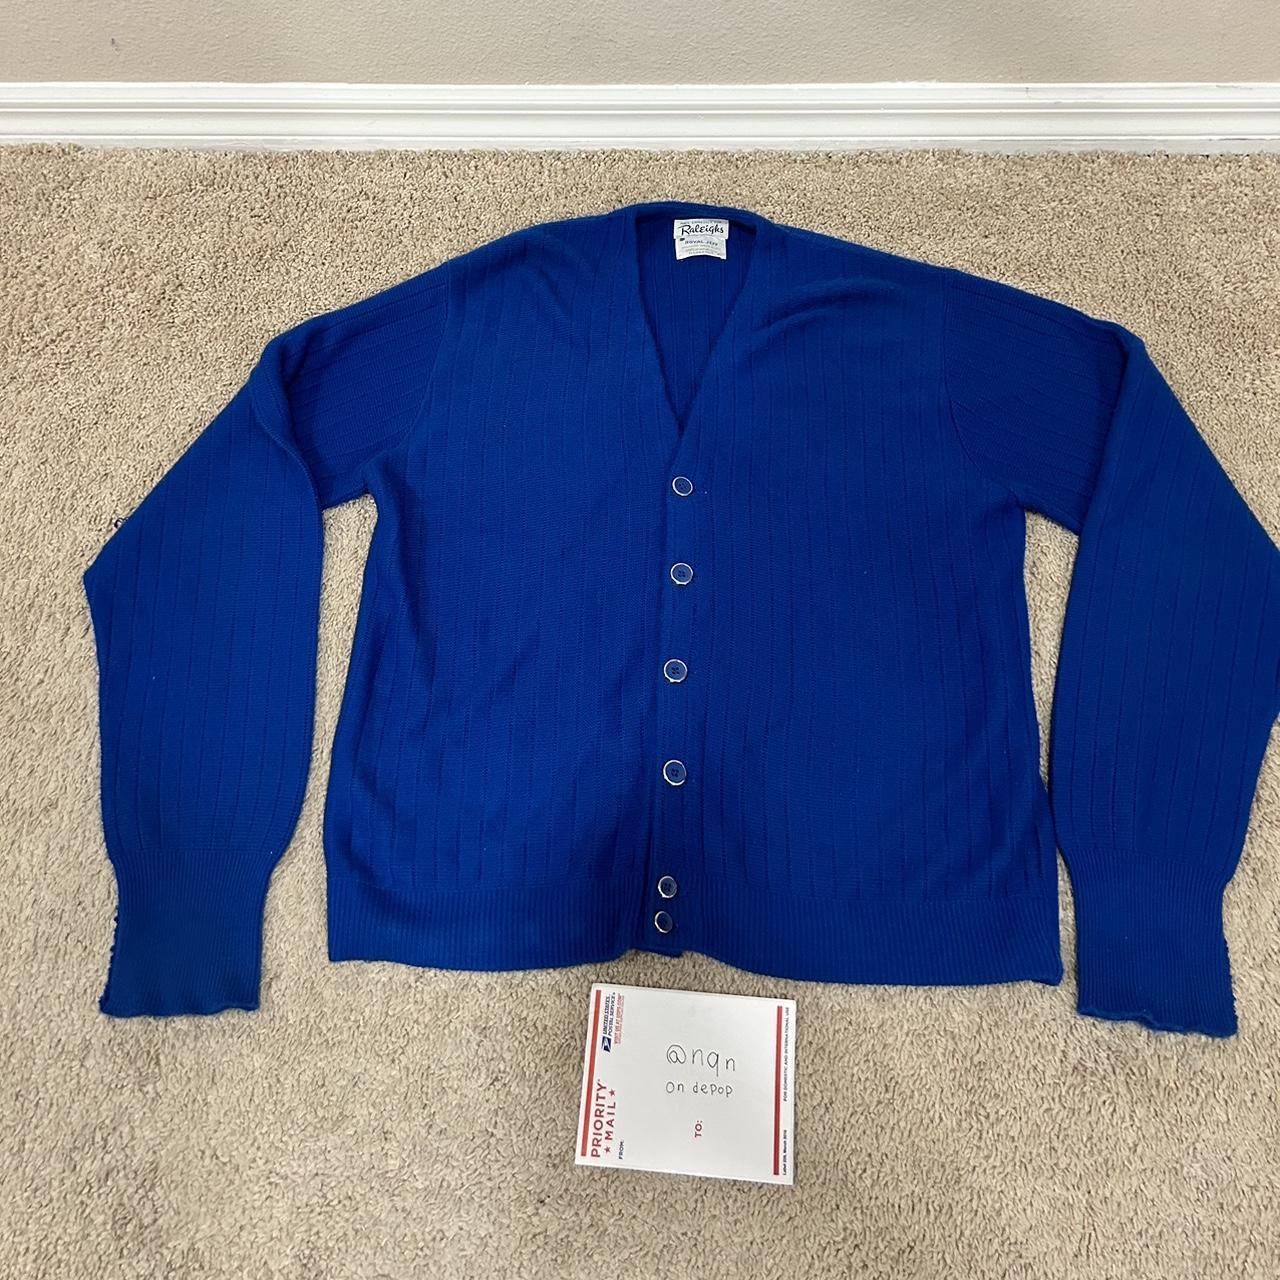 Vintage Blue cardigan 8/10 condition Size:... - Depop